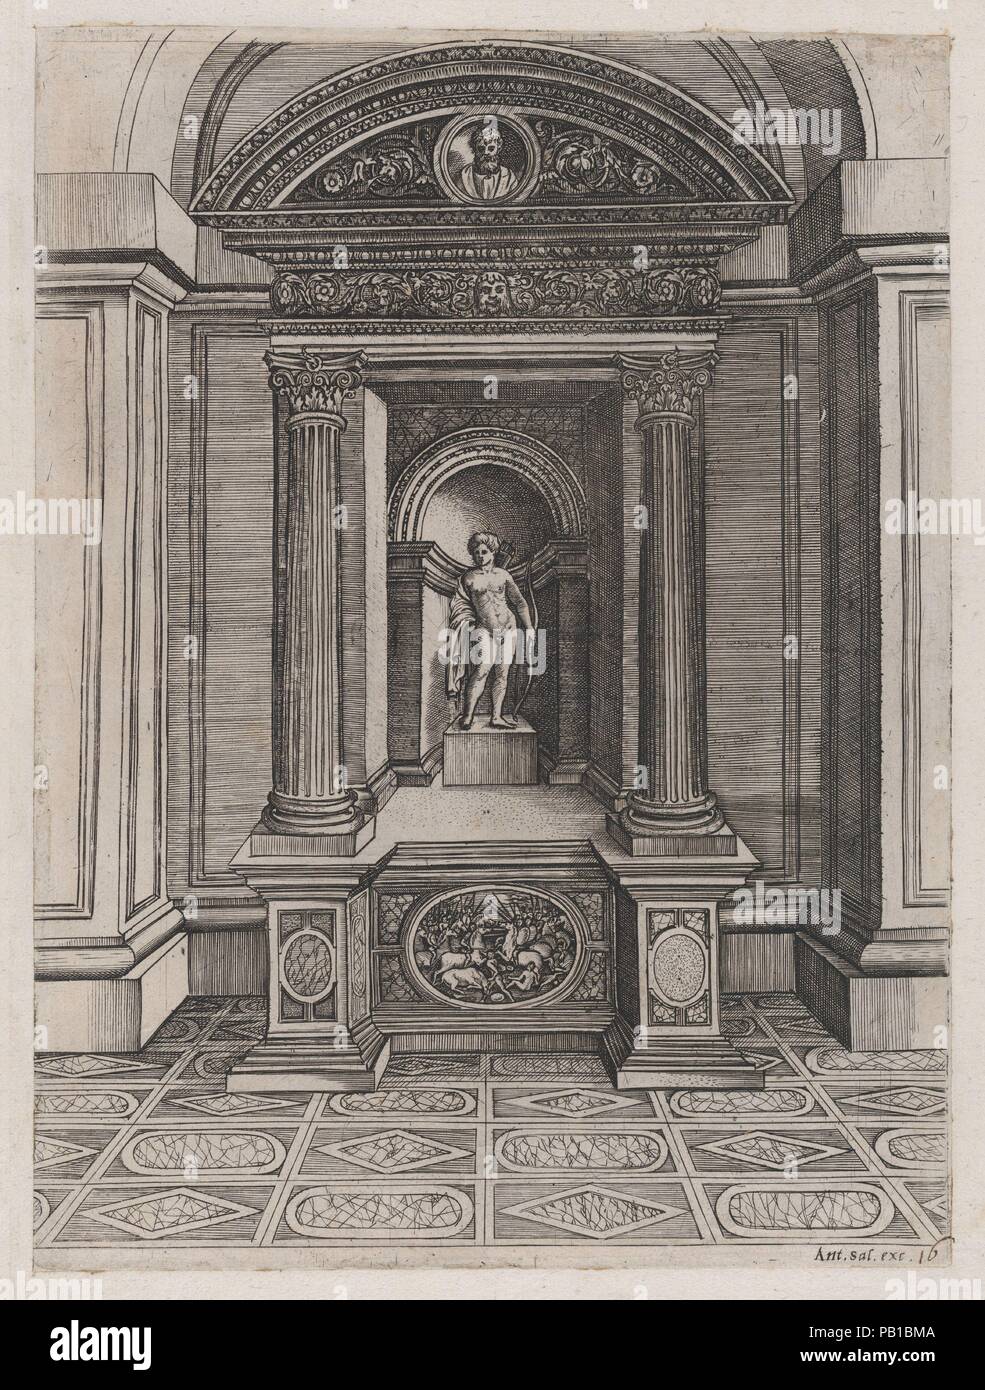 Speculum Romanae Magnificentiae: The Altar of Eros. Artist: Attributed to Agostino Veneziano (Agostino dei Musi) (Italian, Venice ca. 1490-after 1536 Rome); After (?) Raphael (Raffaello Sanzio or Santi) (Italian, Urbino 1483-1520 Rome). Dimensions: mount: 17 15/16 x 11 13/16 in. (45.5 x 30 cm)  sheet: 11 5/8 x 8 11/16 in. (29.5 x 22 cm). Publisher: Antonio Salamanca (Salamanca 1478-1562 Rome). Series/Portfolio: Speculum Romanae Magnificentiae. Date: ca. 1514-36.  This print comes from the museum's copy of the Speculum Romanae Magnificentiae (The Mirror of Roman Magnificence) The Speculum found Stock Photo